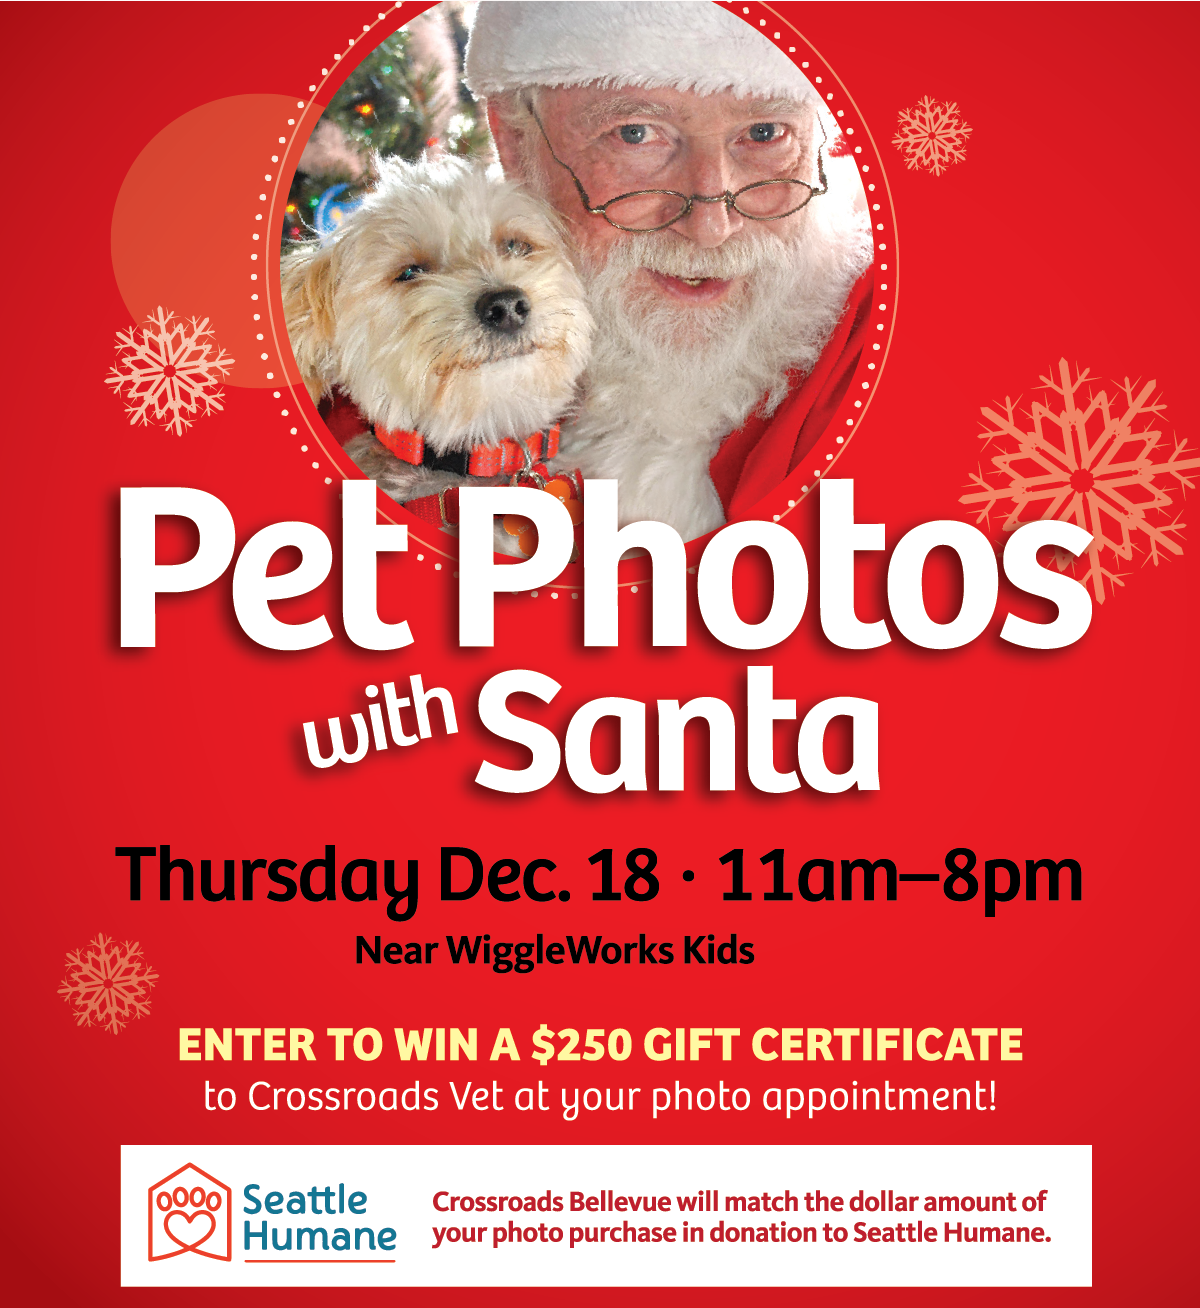 Santa-Pet-Photos-1200px-for-website.png